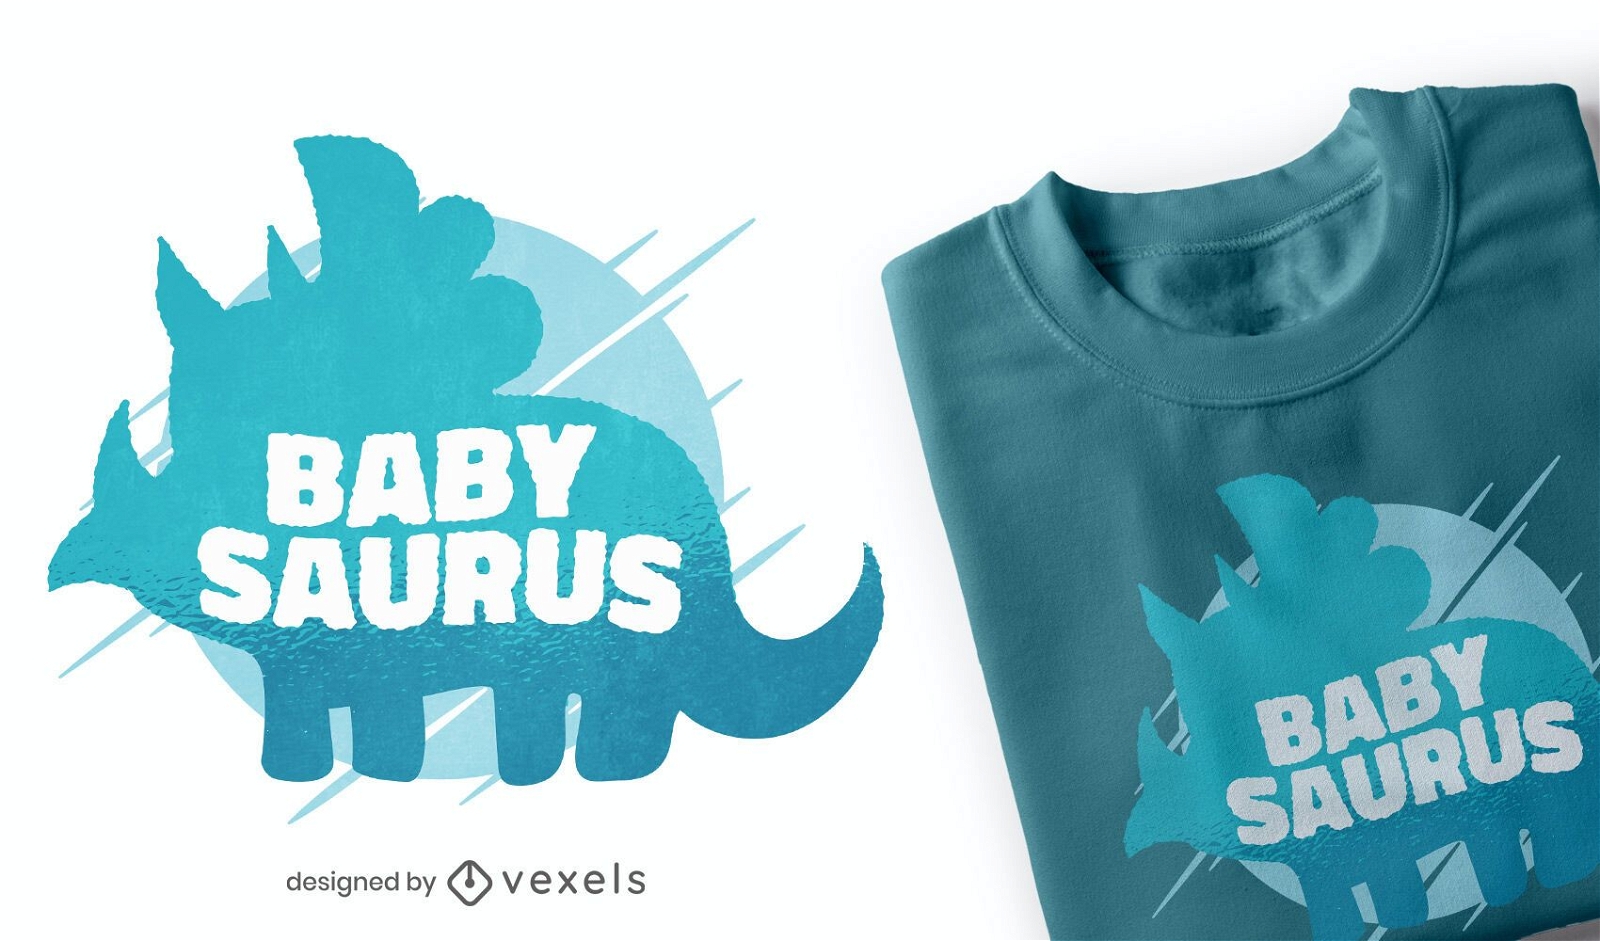 Baby saurus t-shirt design